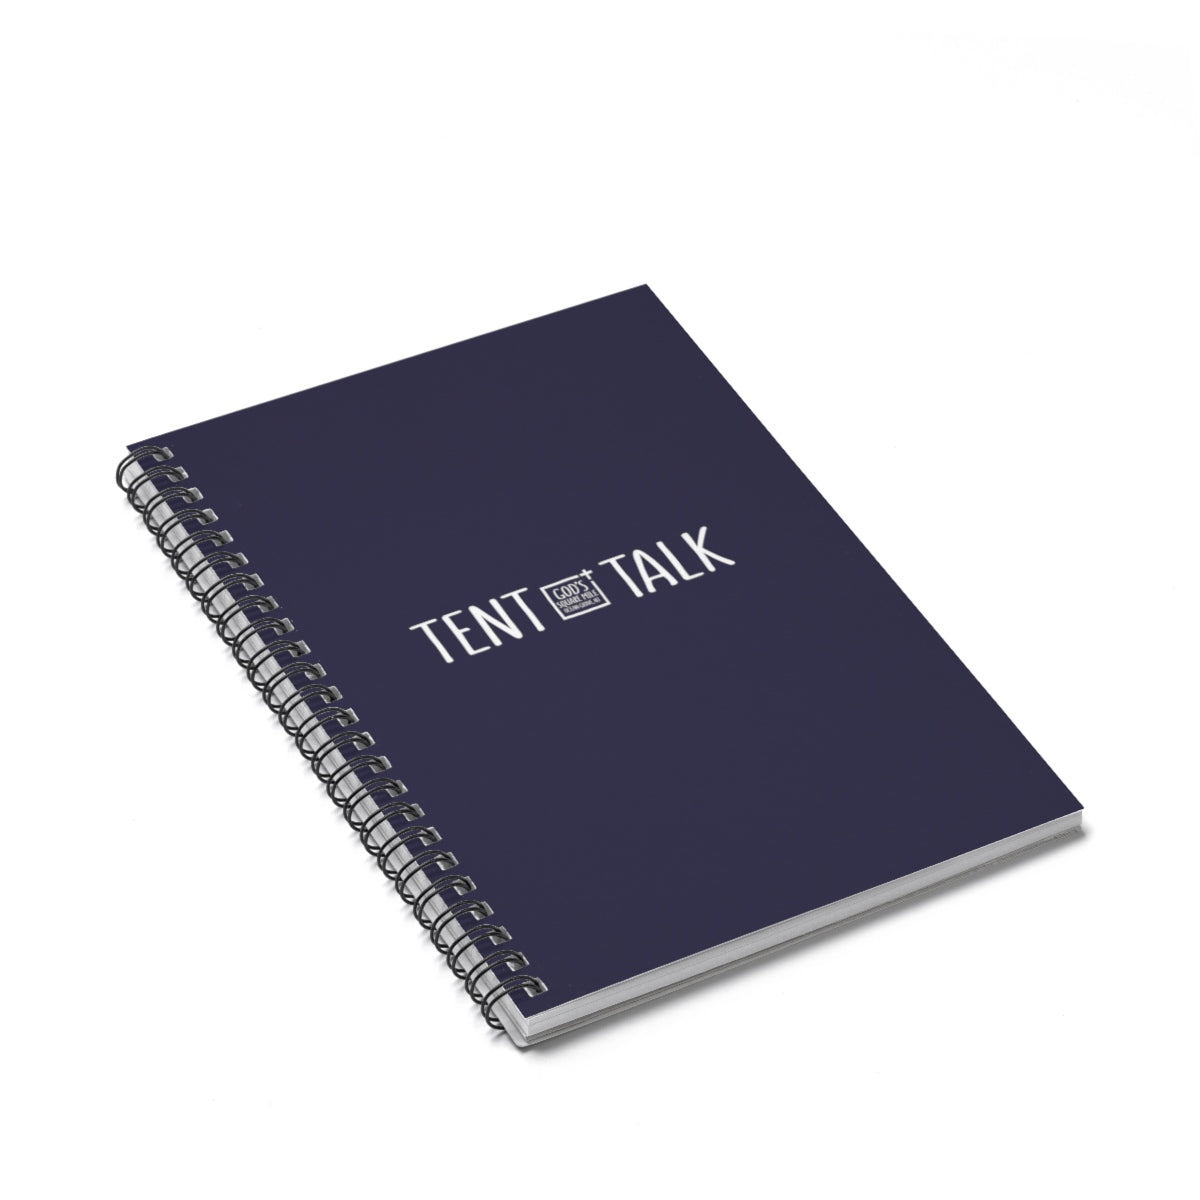 Tent Talk Spiral Notebook - Ruled Line: Dark Blue